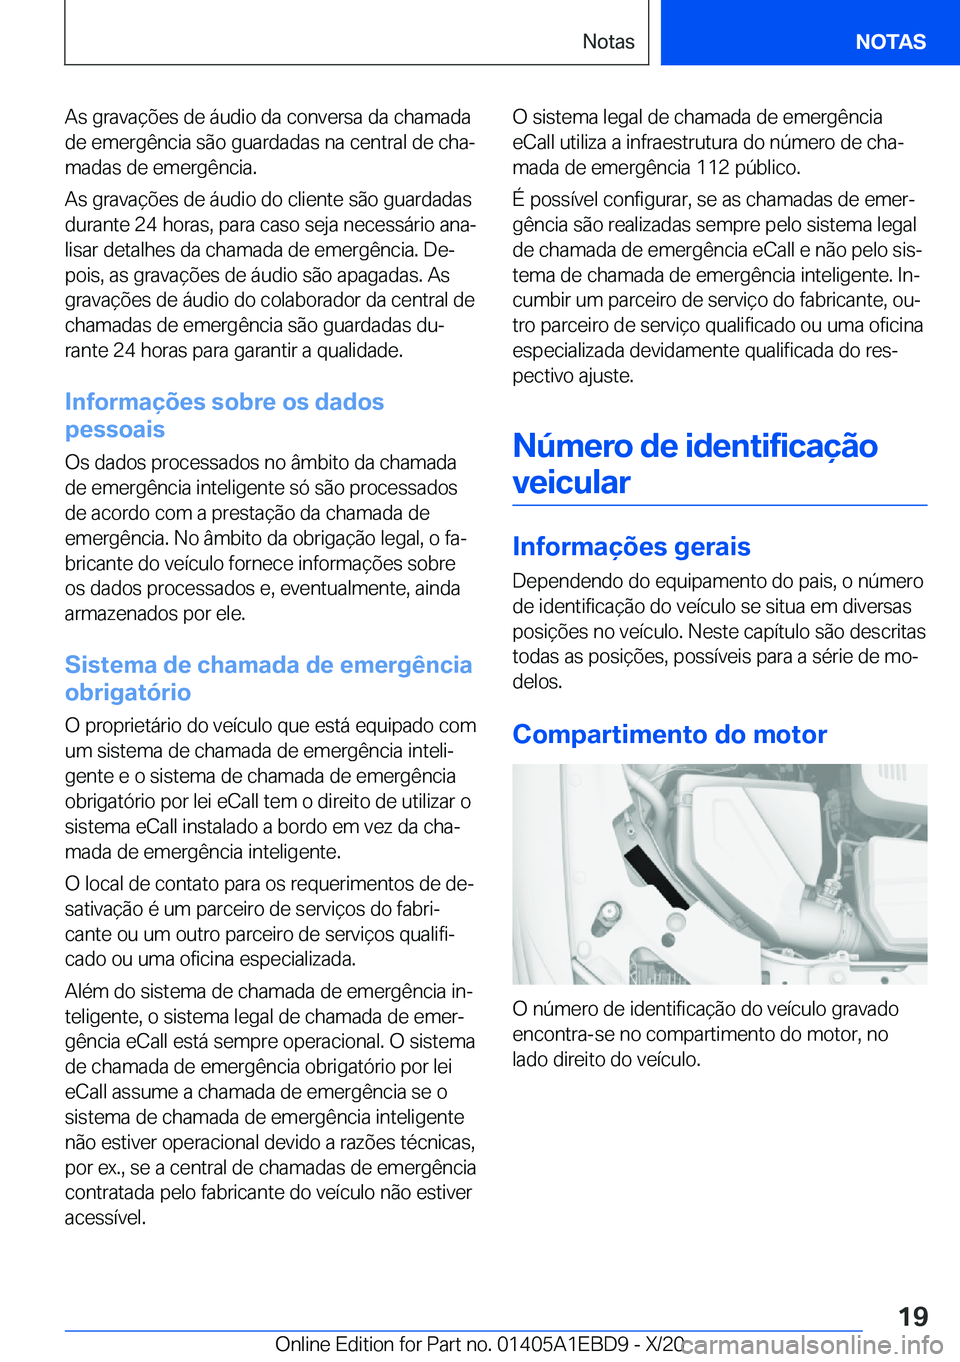 BMW 3 SERIES 2021  Manual do condutor (in Portuguese) �A�s��g�r�a�v�a�